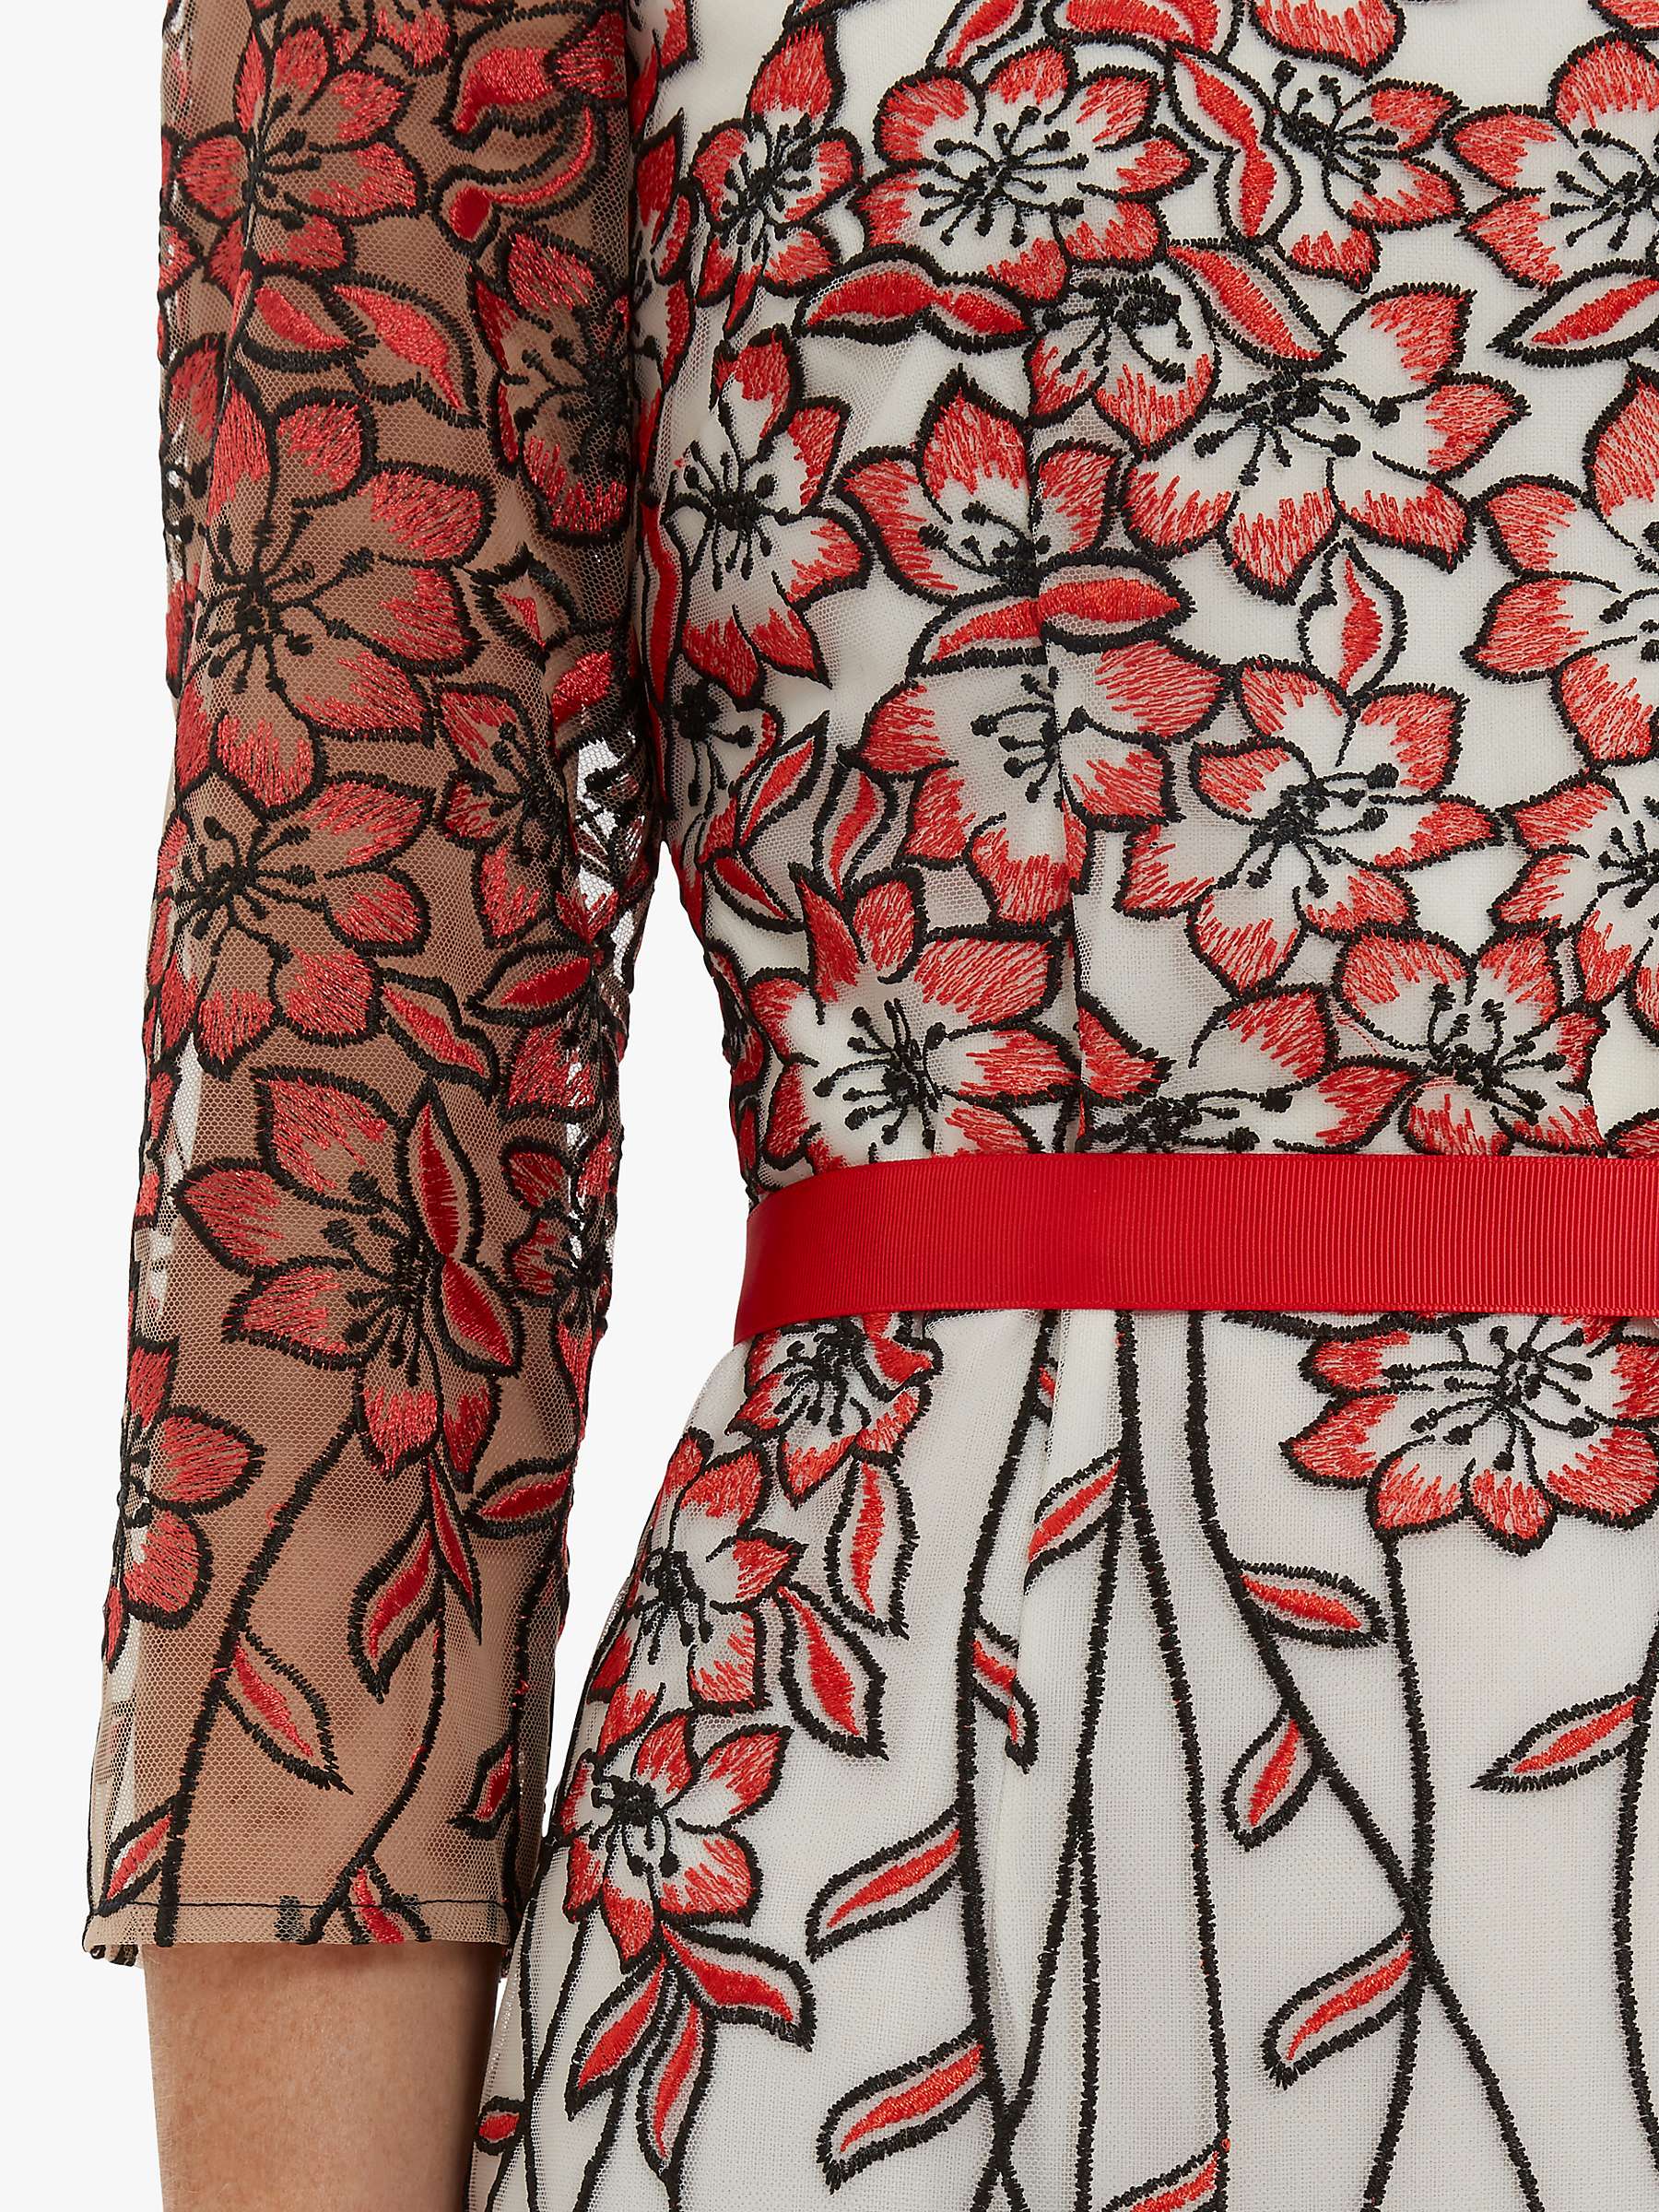 Buy Gina Bacconi Ragna Embroidered Dress, Red/Black Online at johnlewis.com